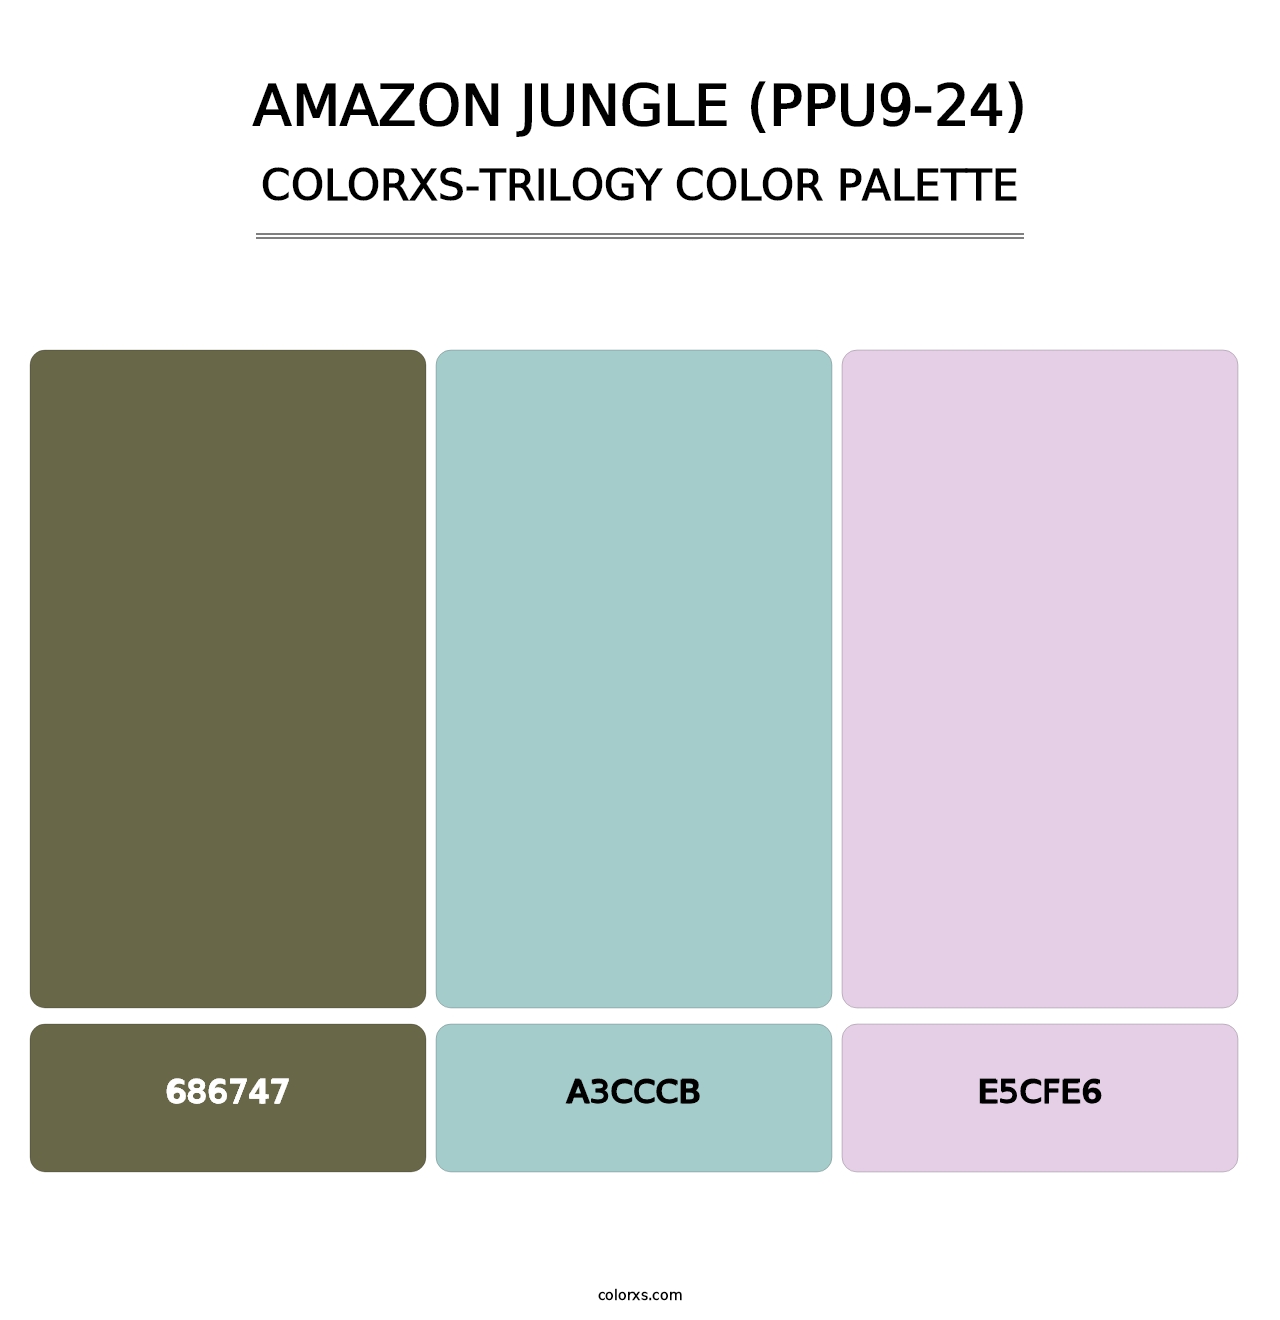 Amazon Jungle (PPU9-24) - Colorxs Trilogy Palette